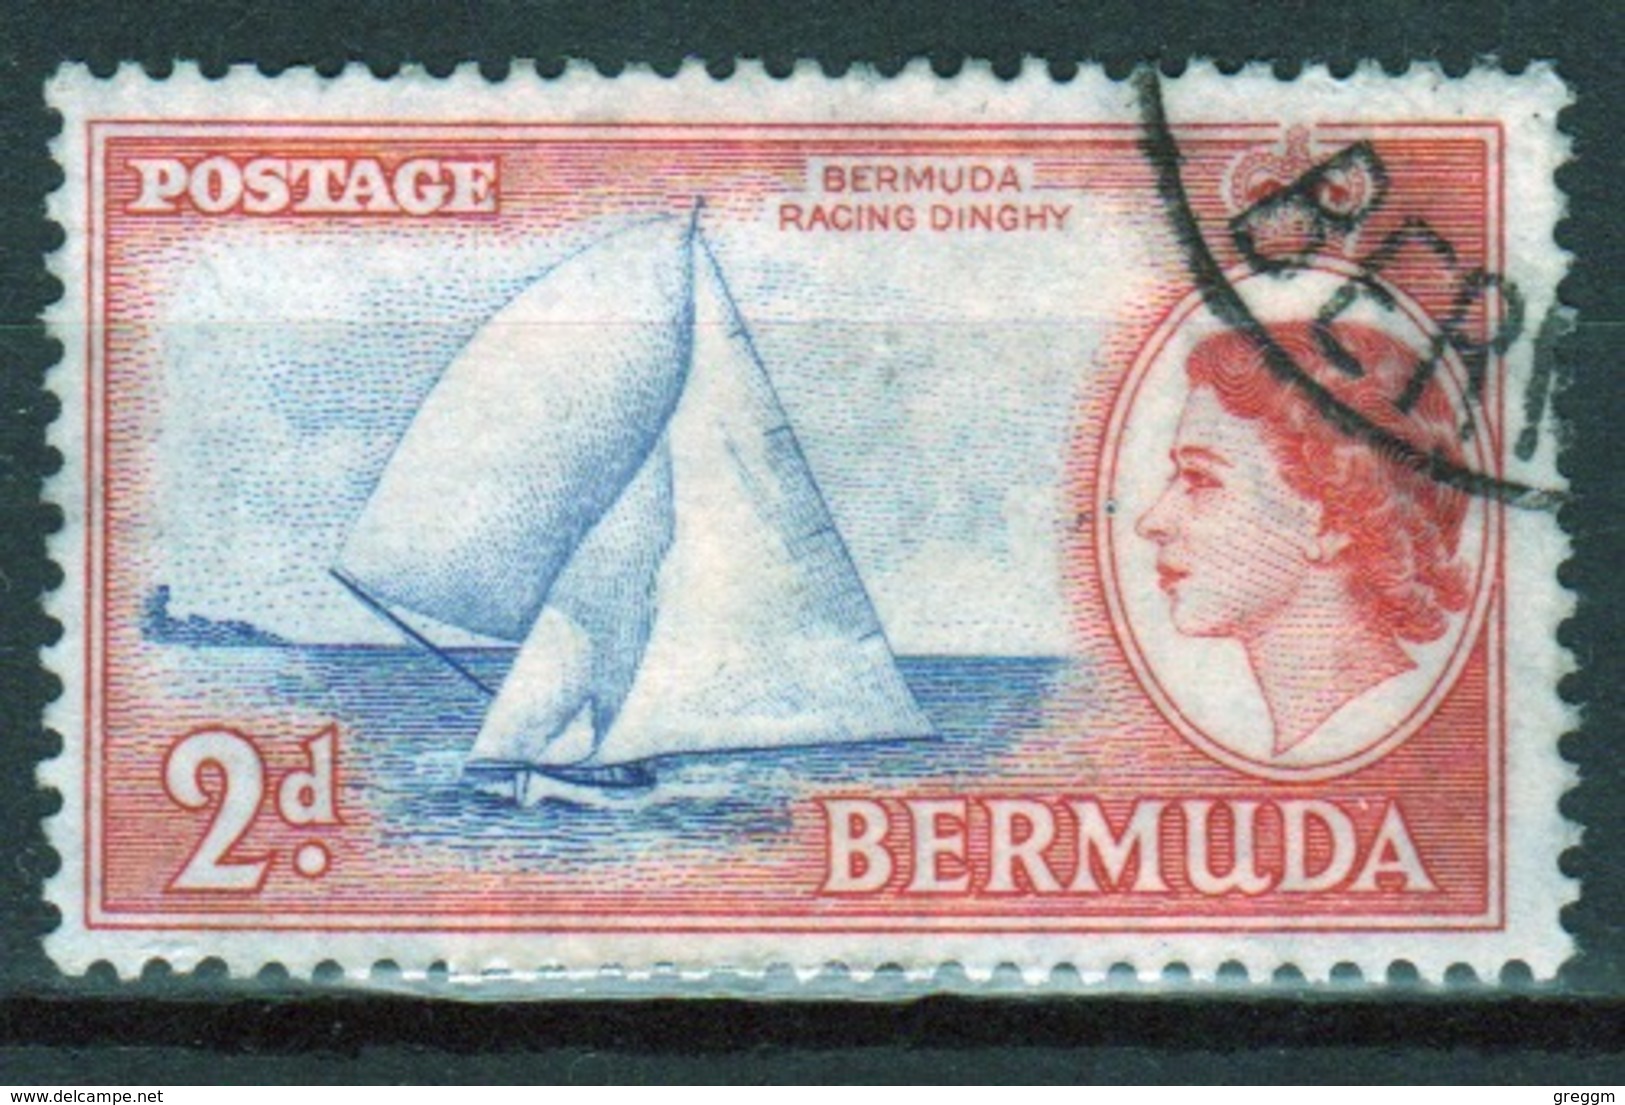 Bermuda Elizabeth II 2d Single Stamp From The 1953 Definitive Set. - Bermuda